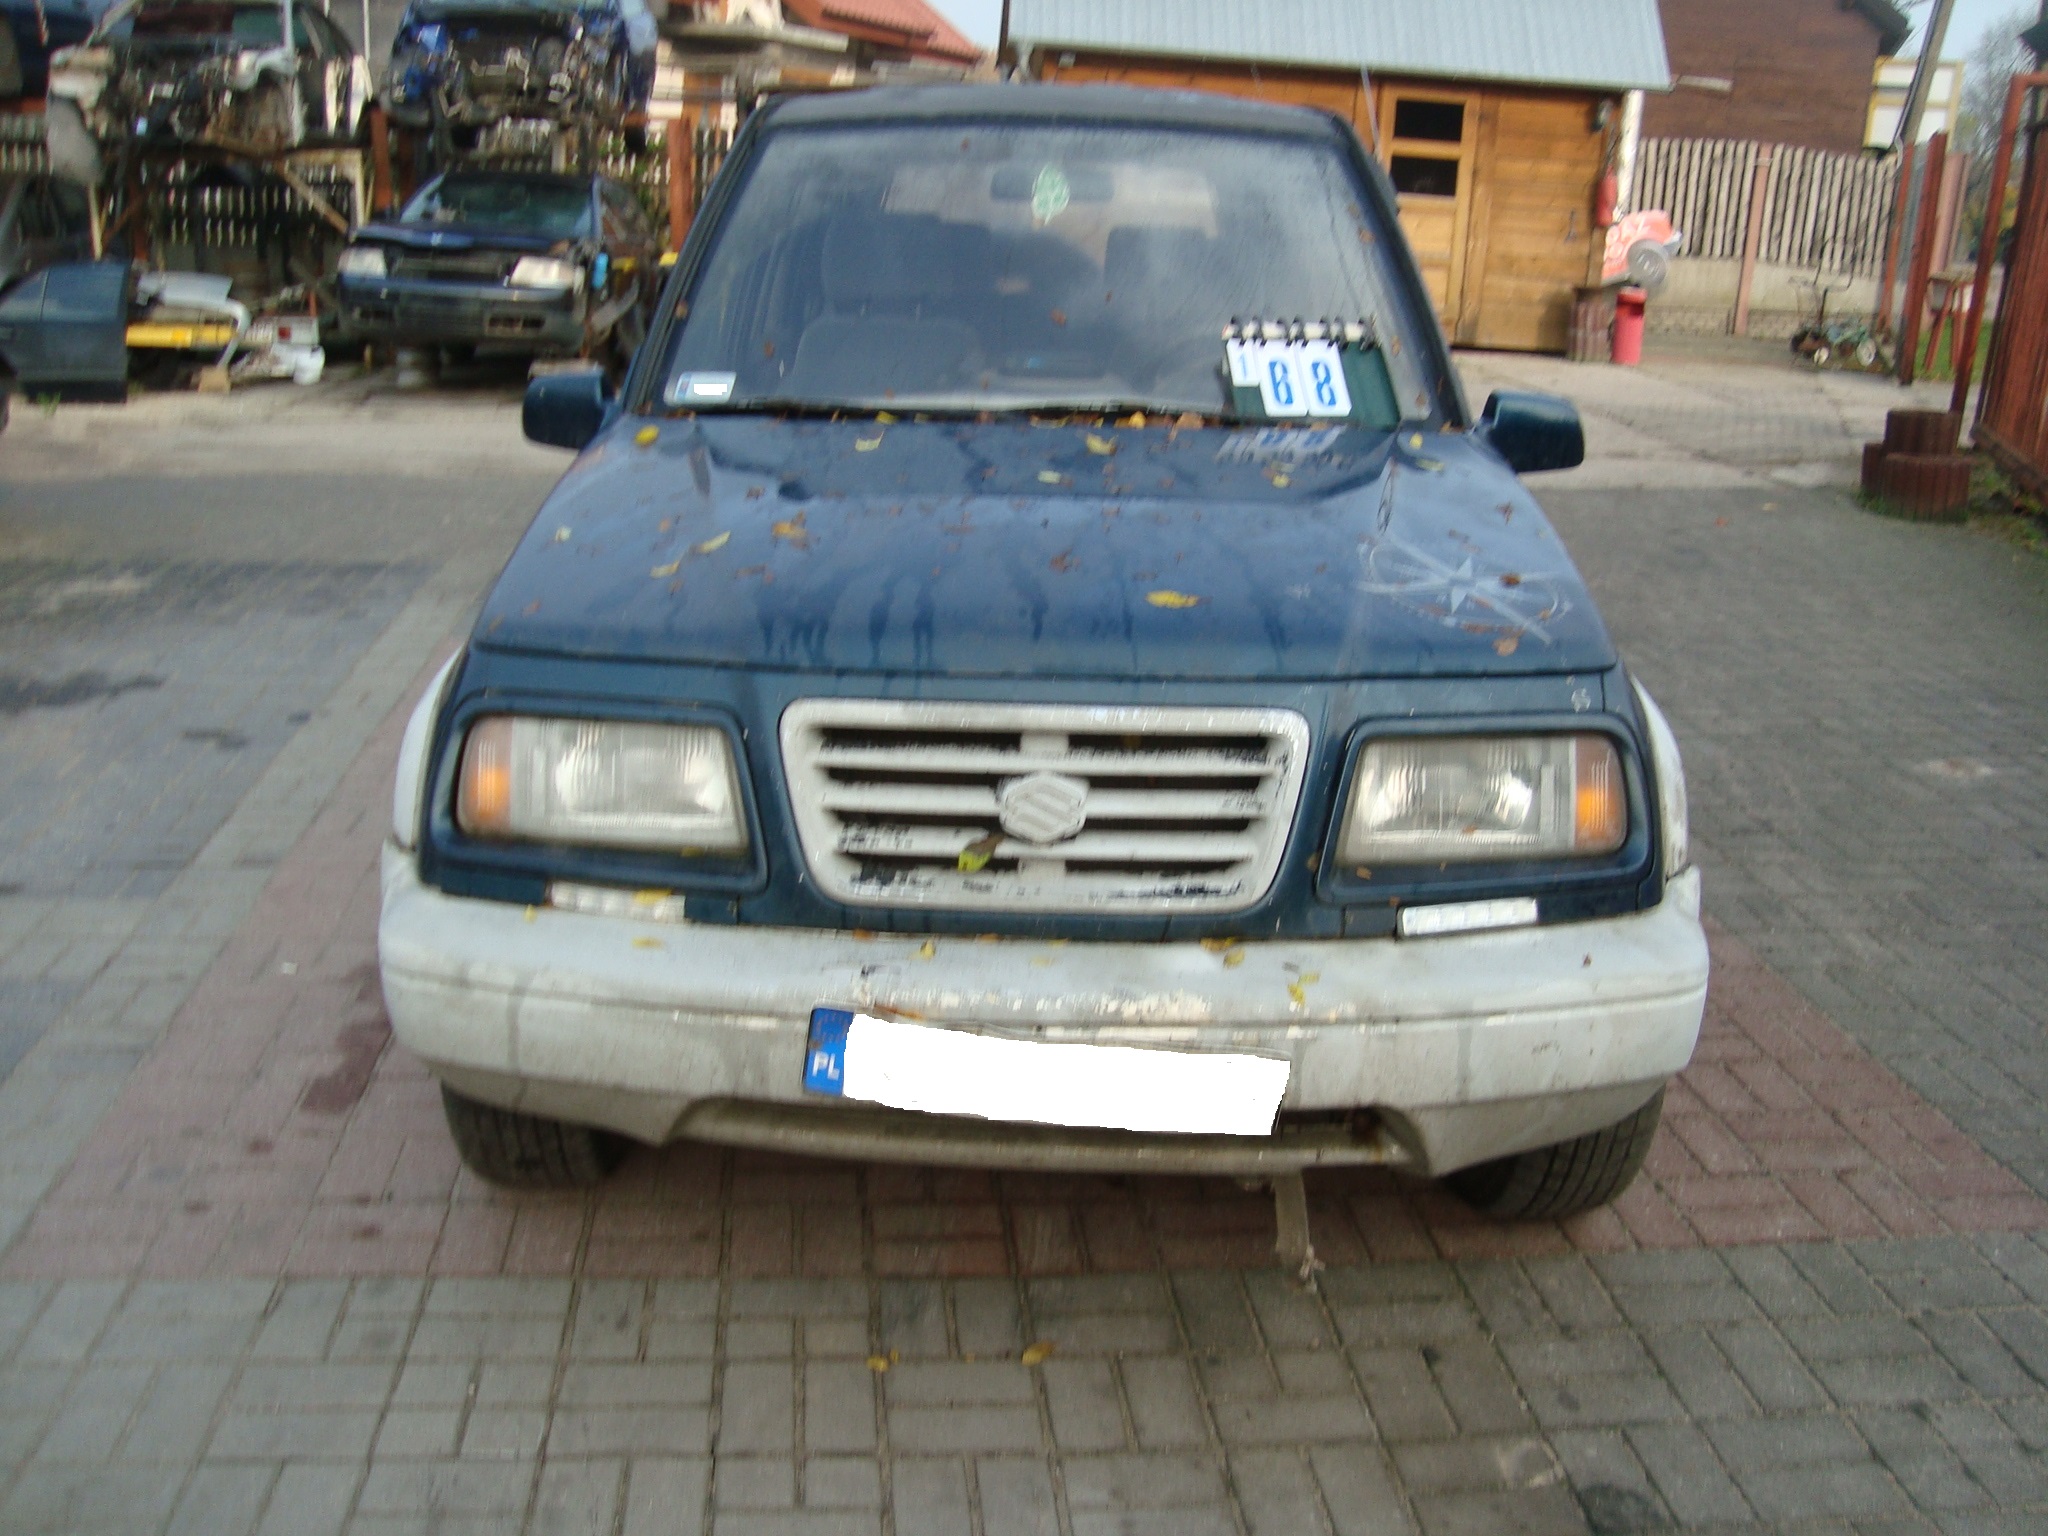 Suzuki Vitara, rok 1995, poj. 2,0 B bez kół 7006249895